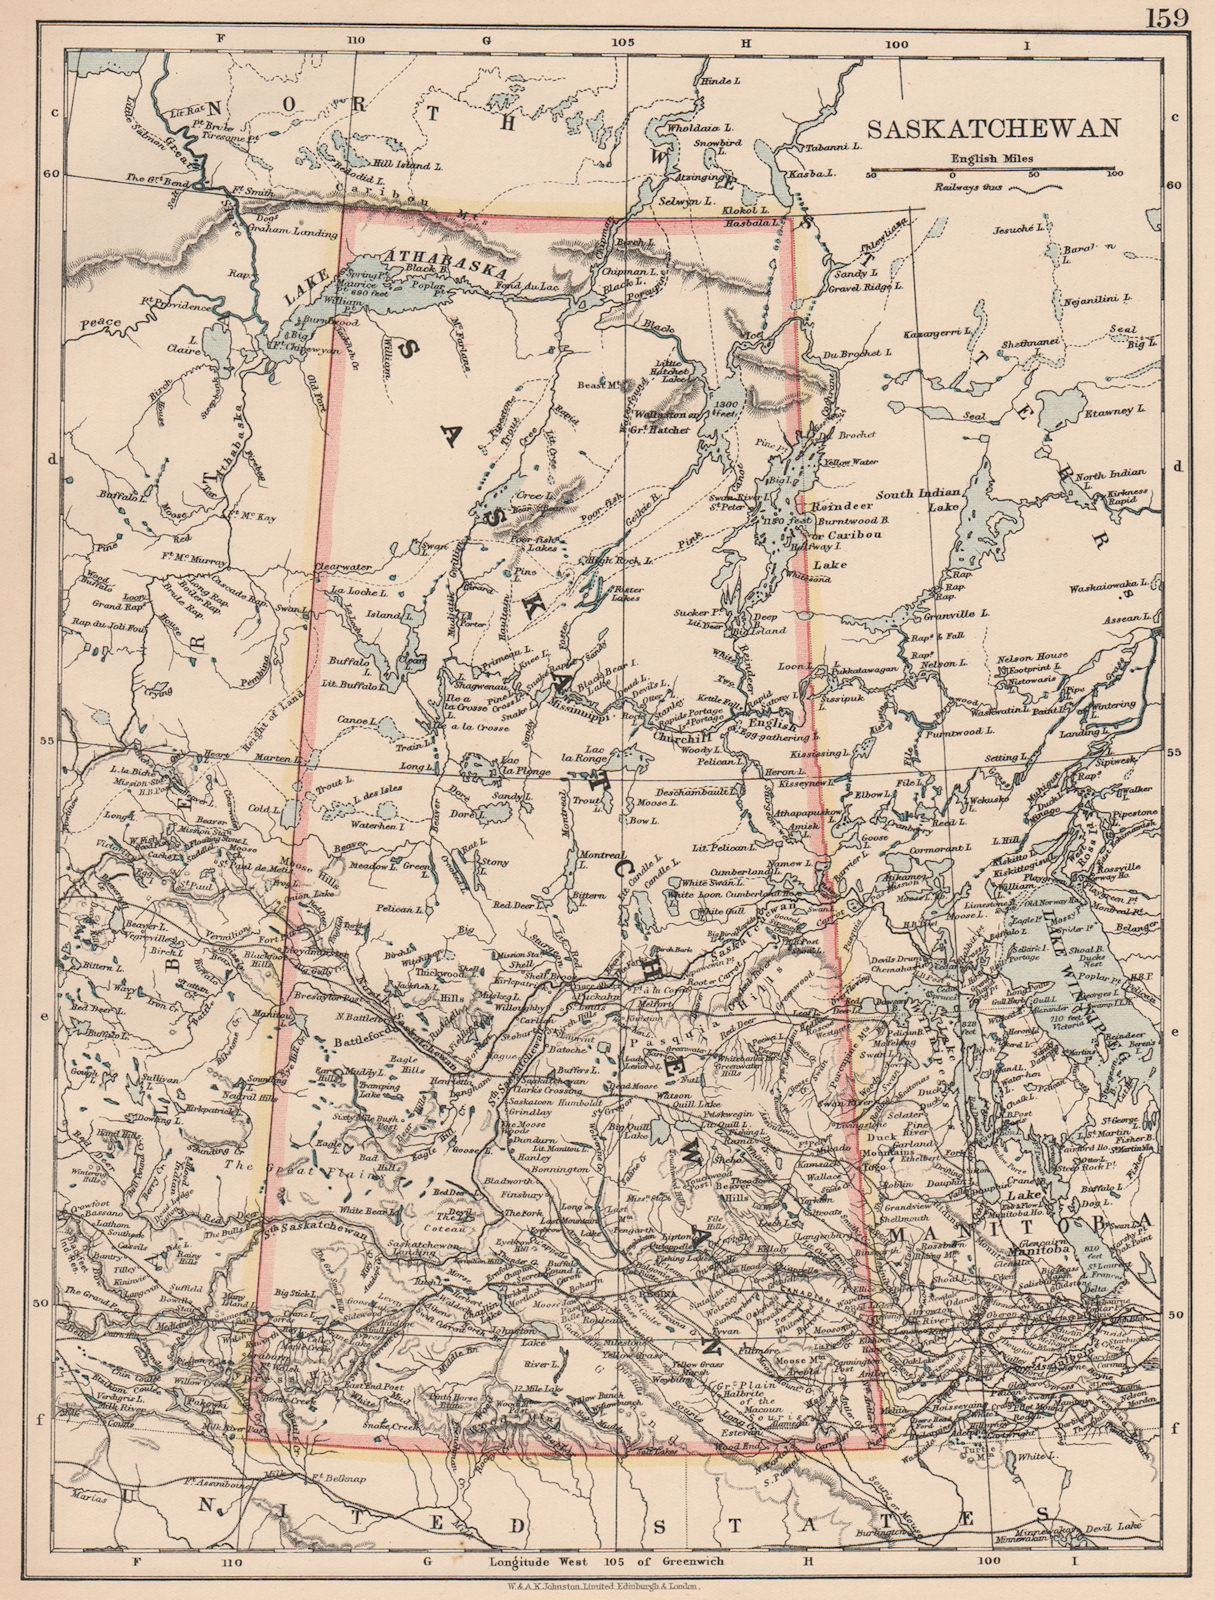 Associate Product SASKATCHEWAN. Province map Railroads Canada British North America. JOHNSTON 1906